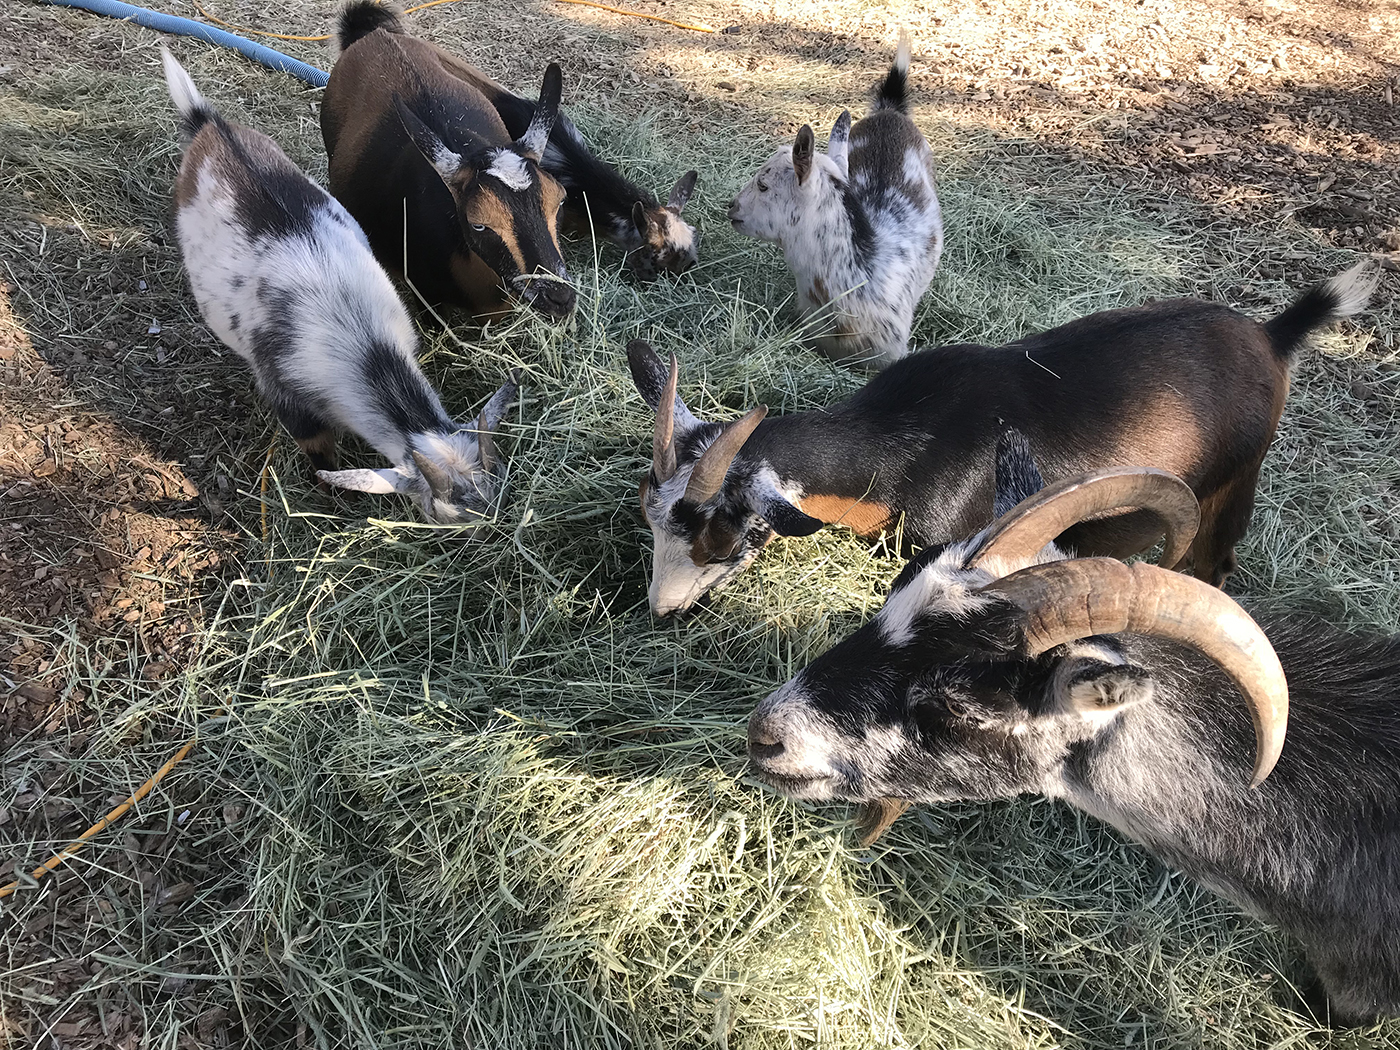 goat eating hay together